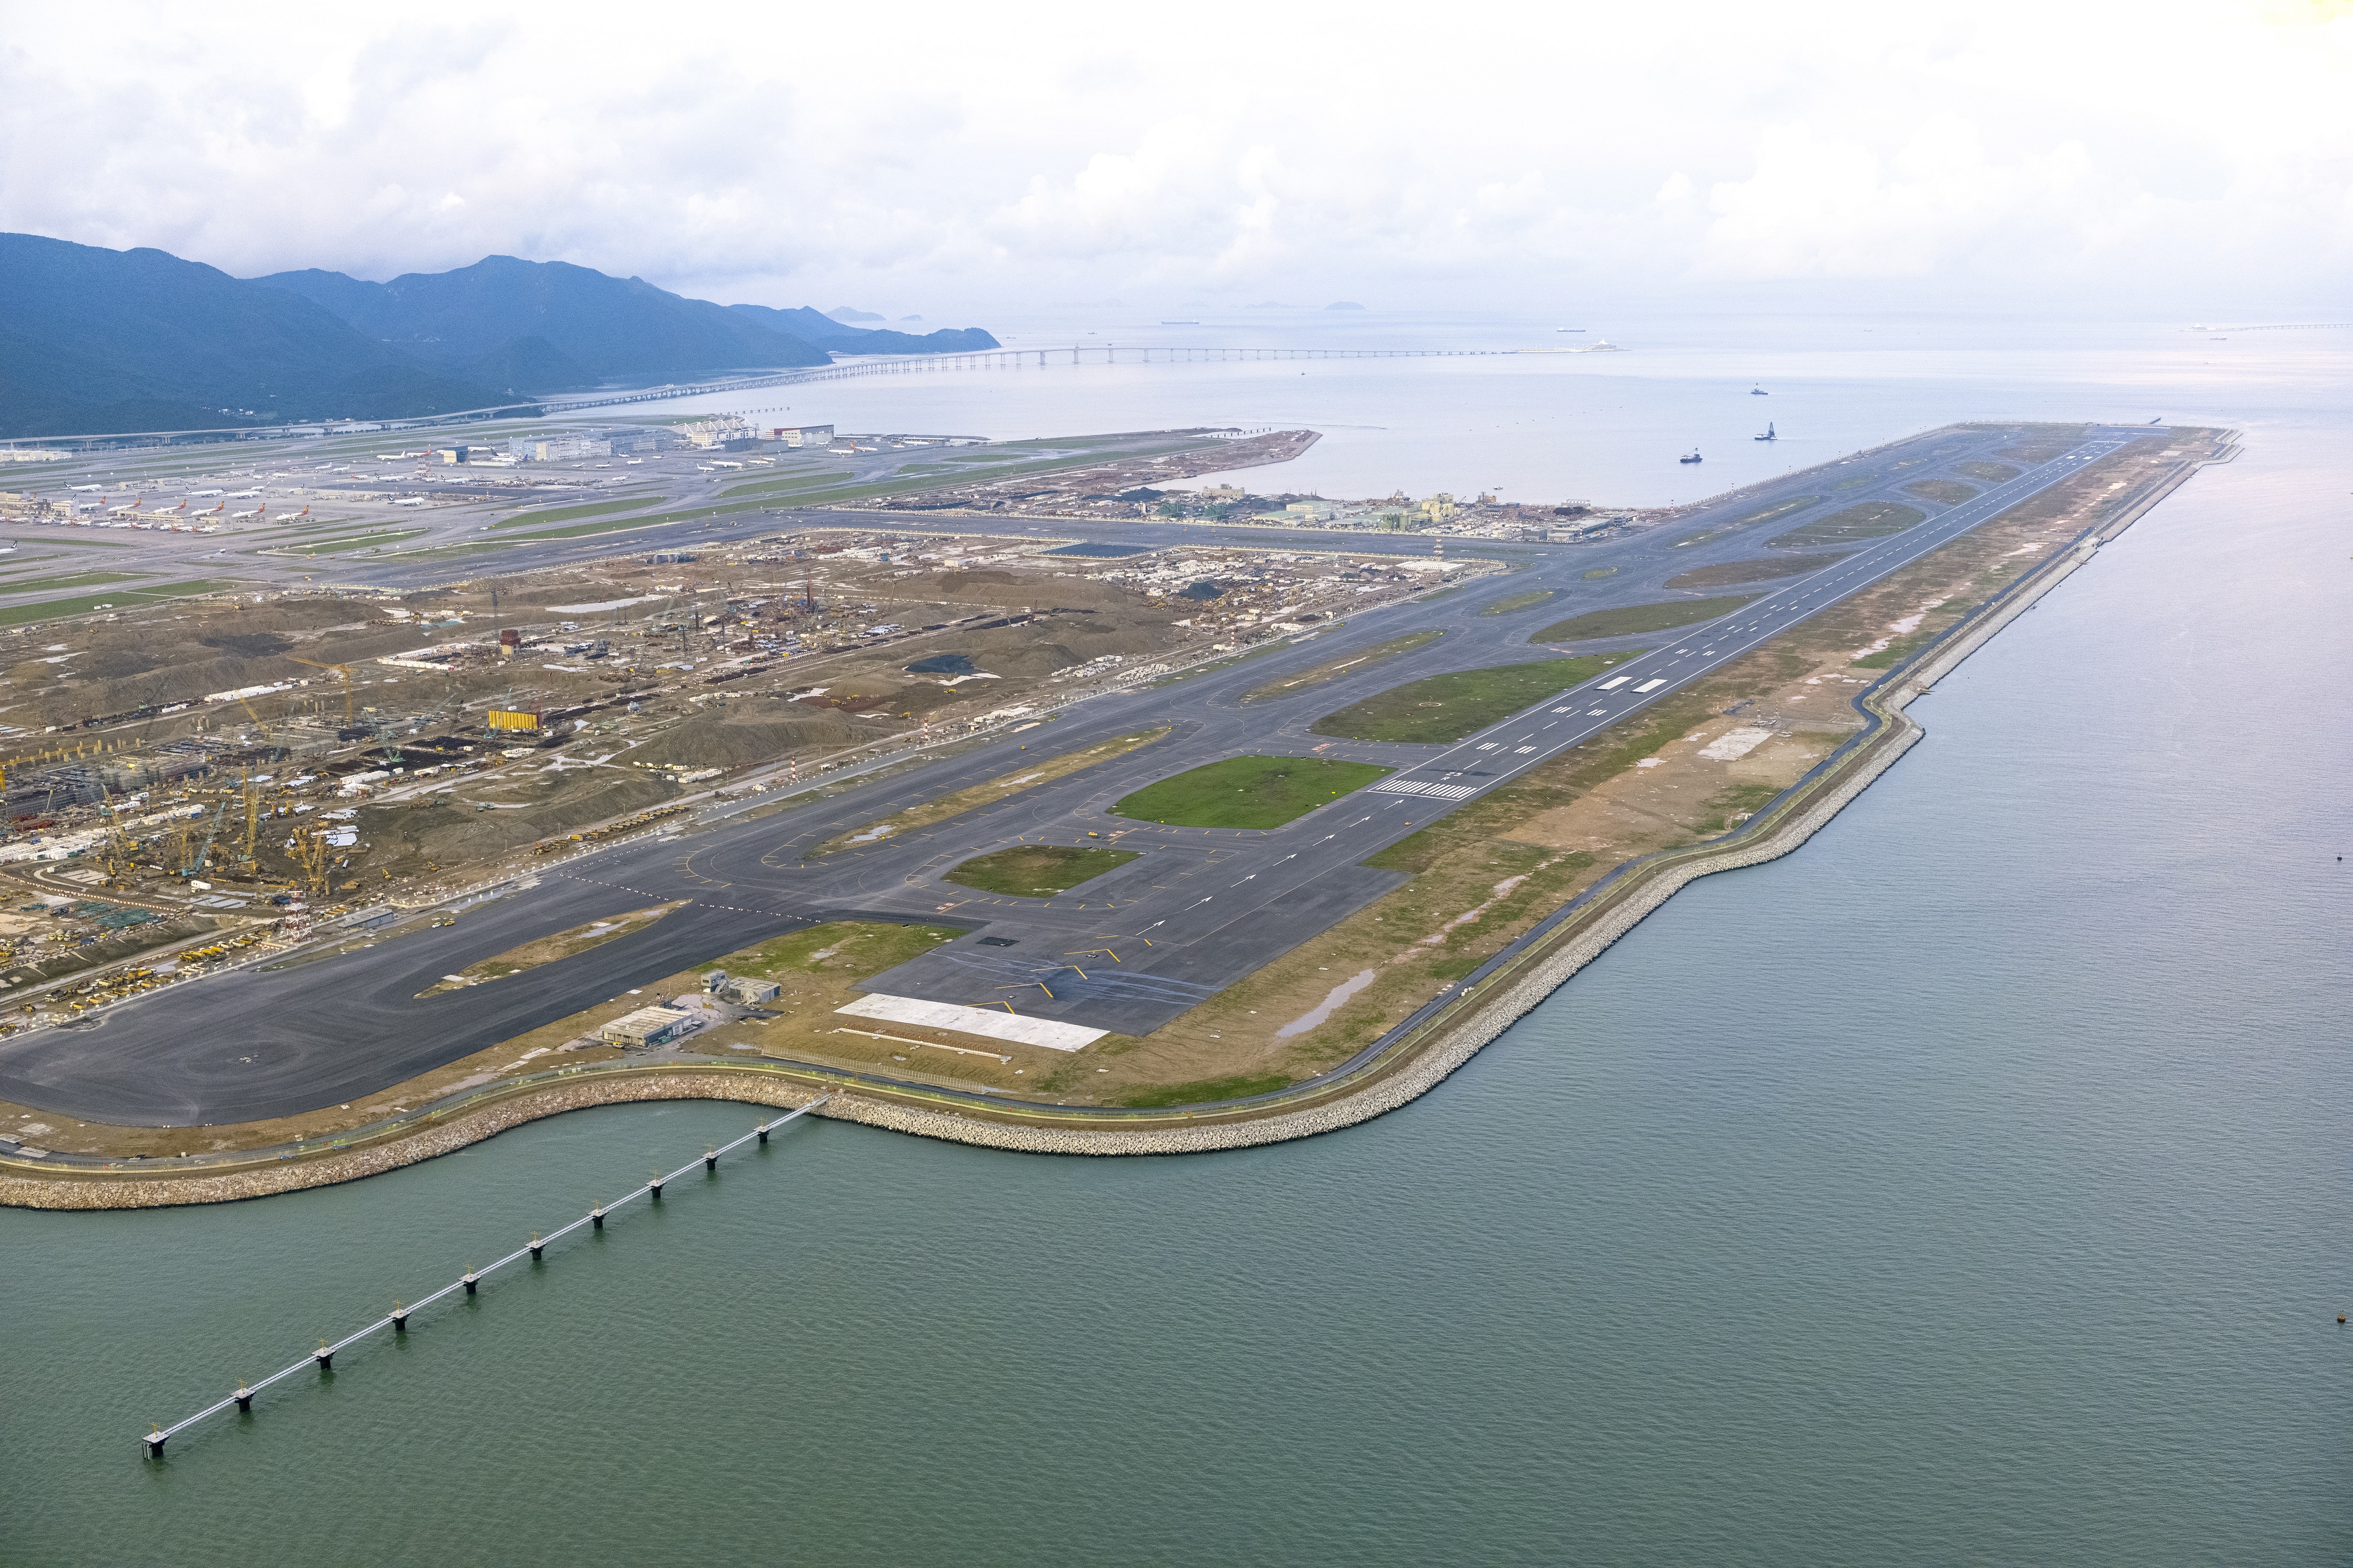 Operation familiarisation for flights on the Third Runway at Hong Kong International Airport starts on 8 July. 